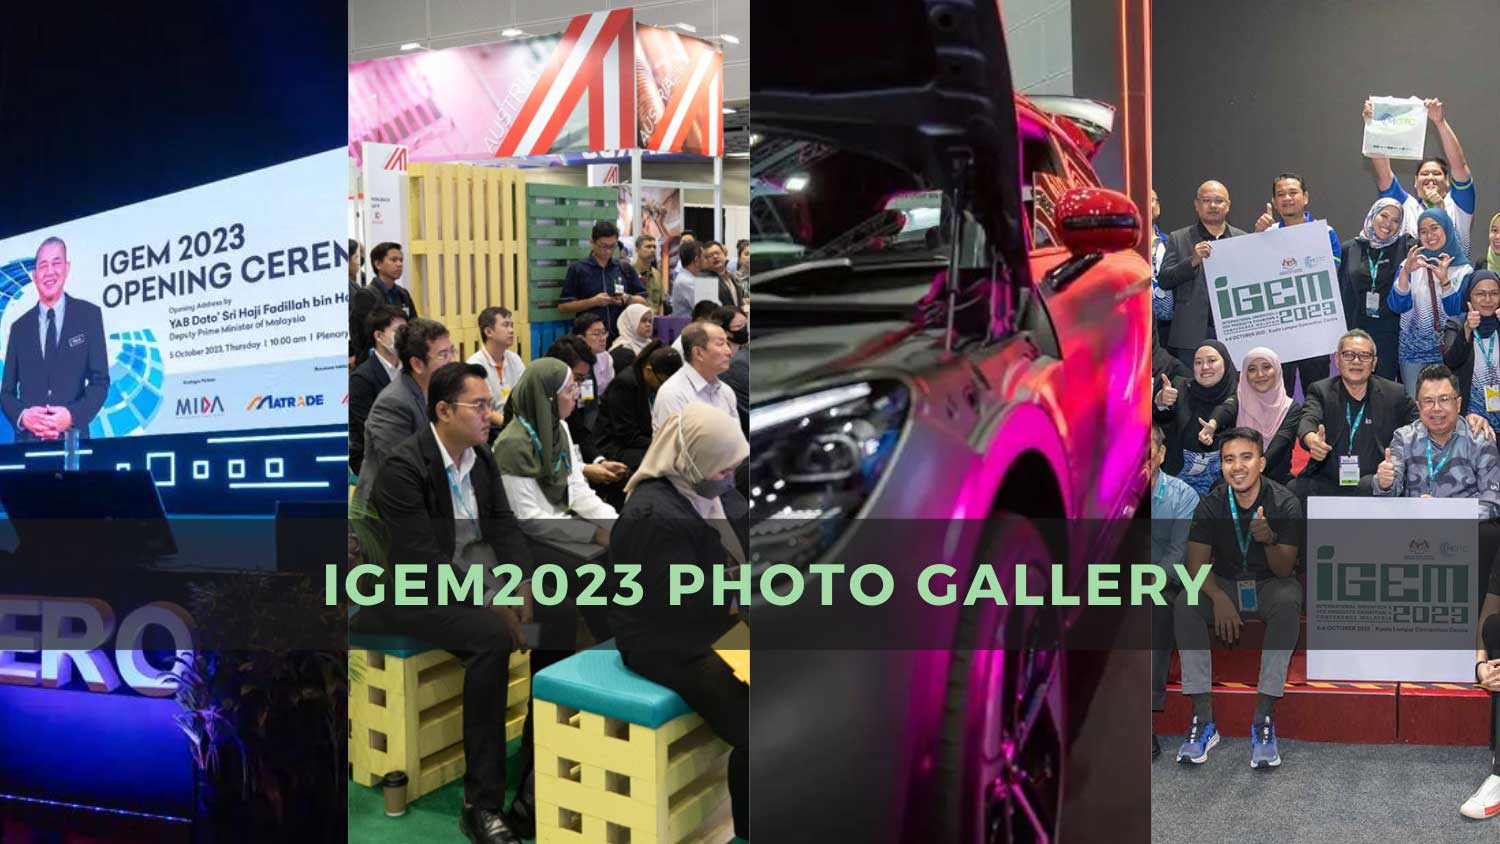 IGEM 2023 Photo Gallery